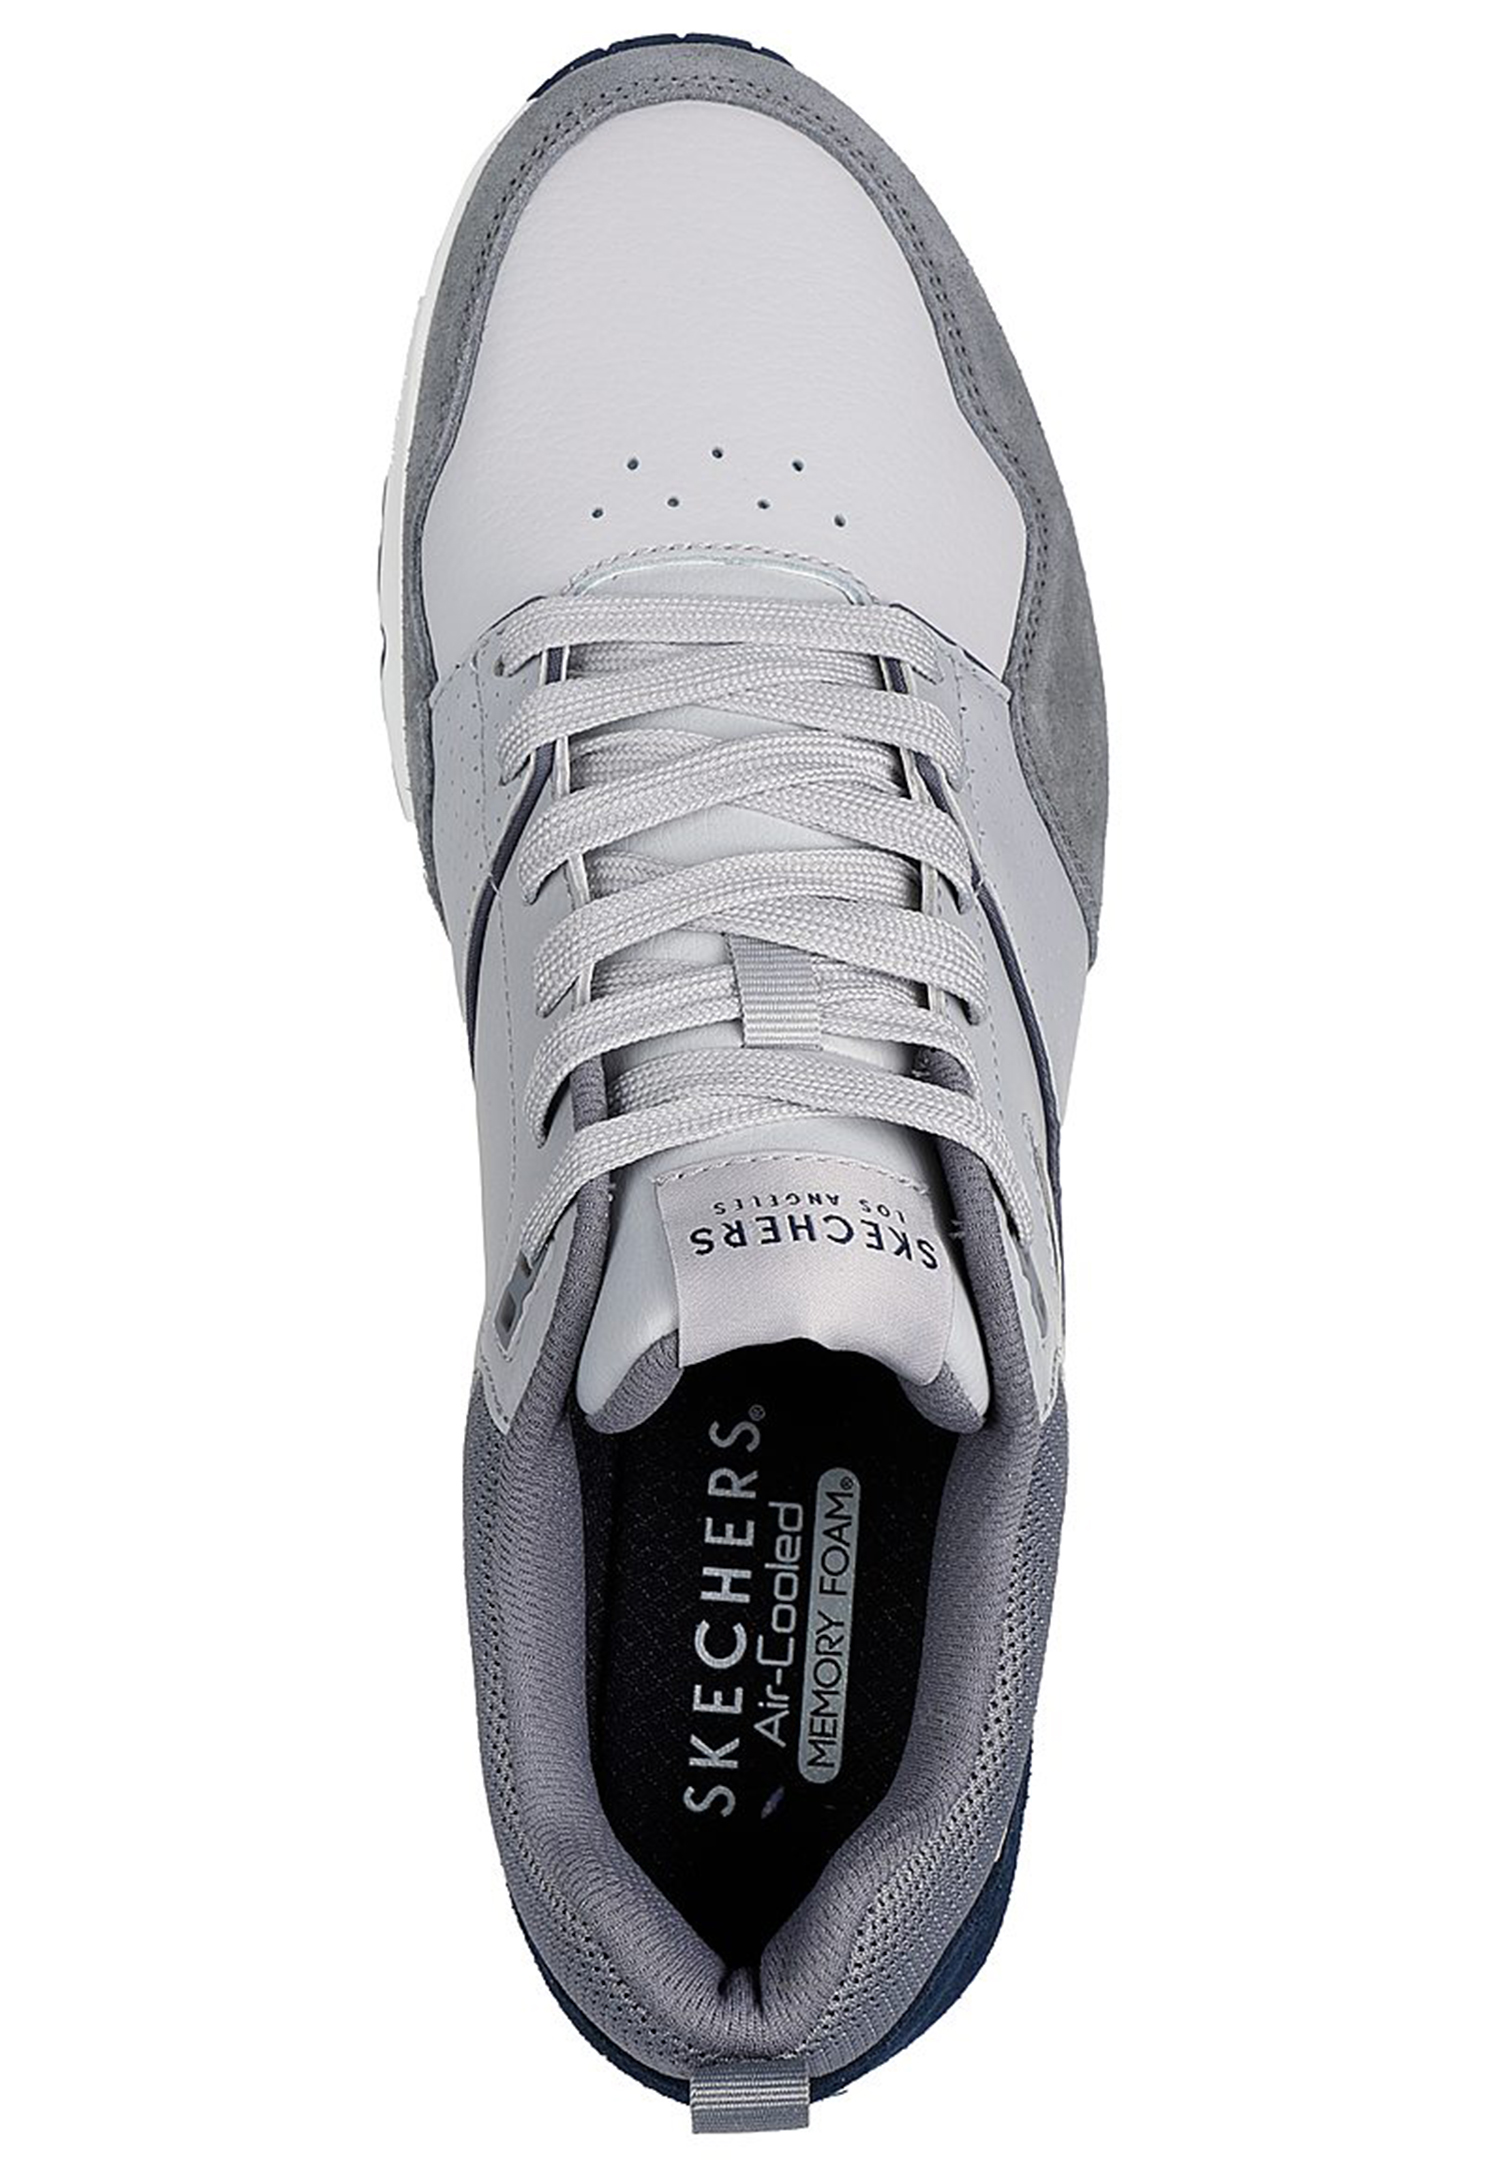 Skechers Street Uno - Retro One Herren Sneakers 183020 GRY grau